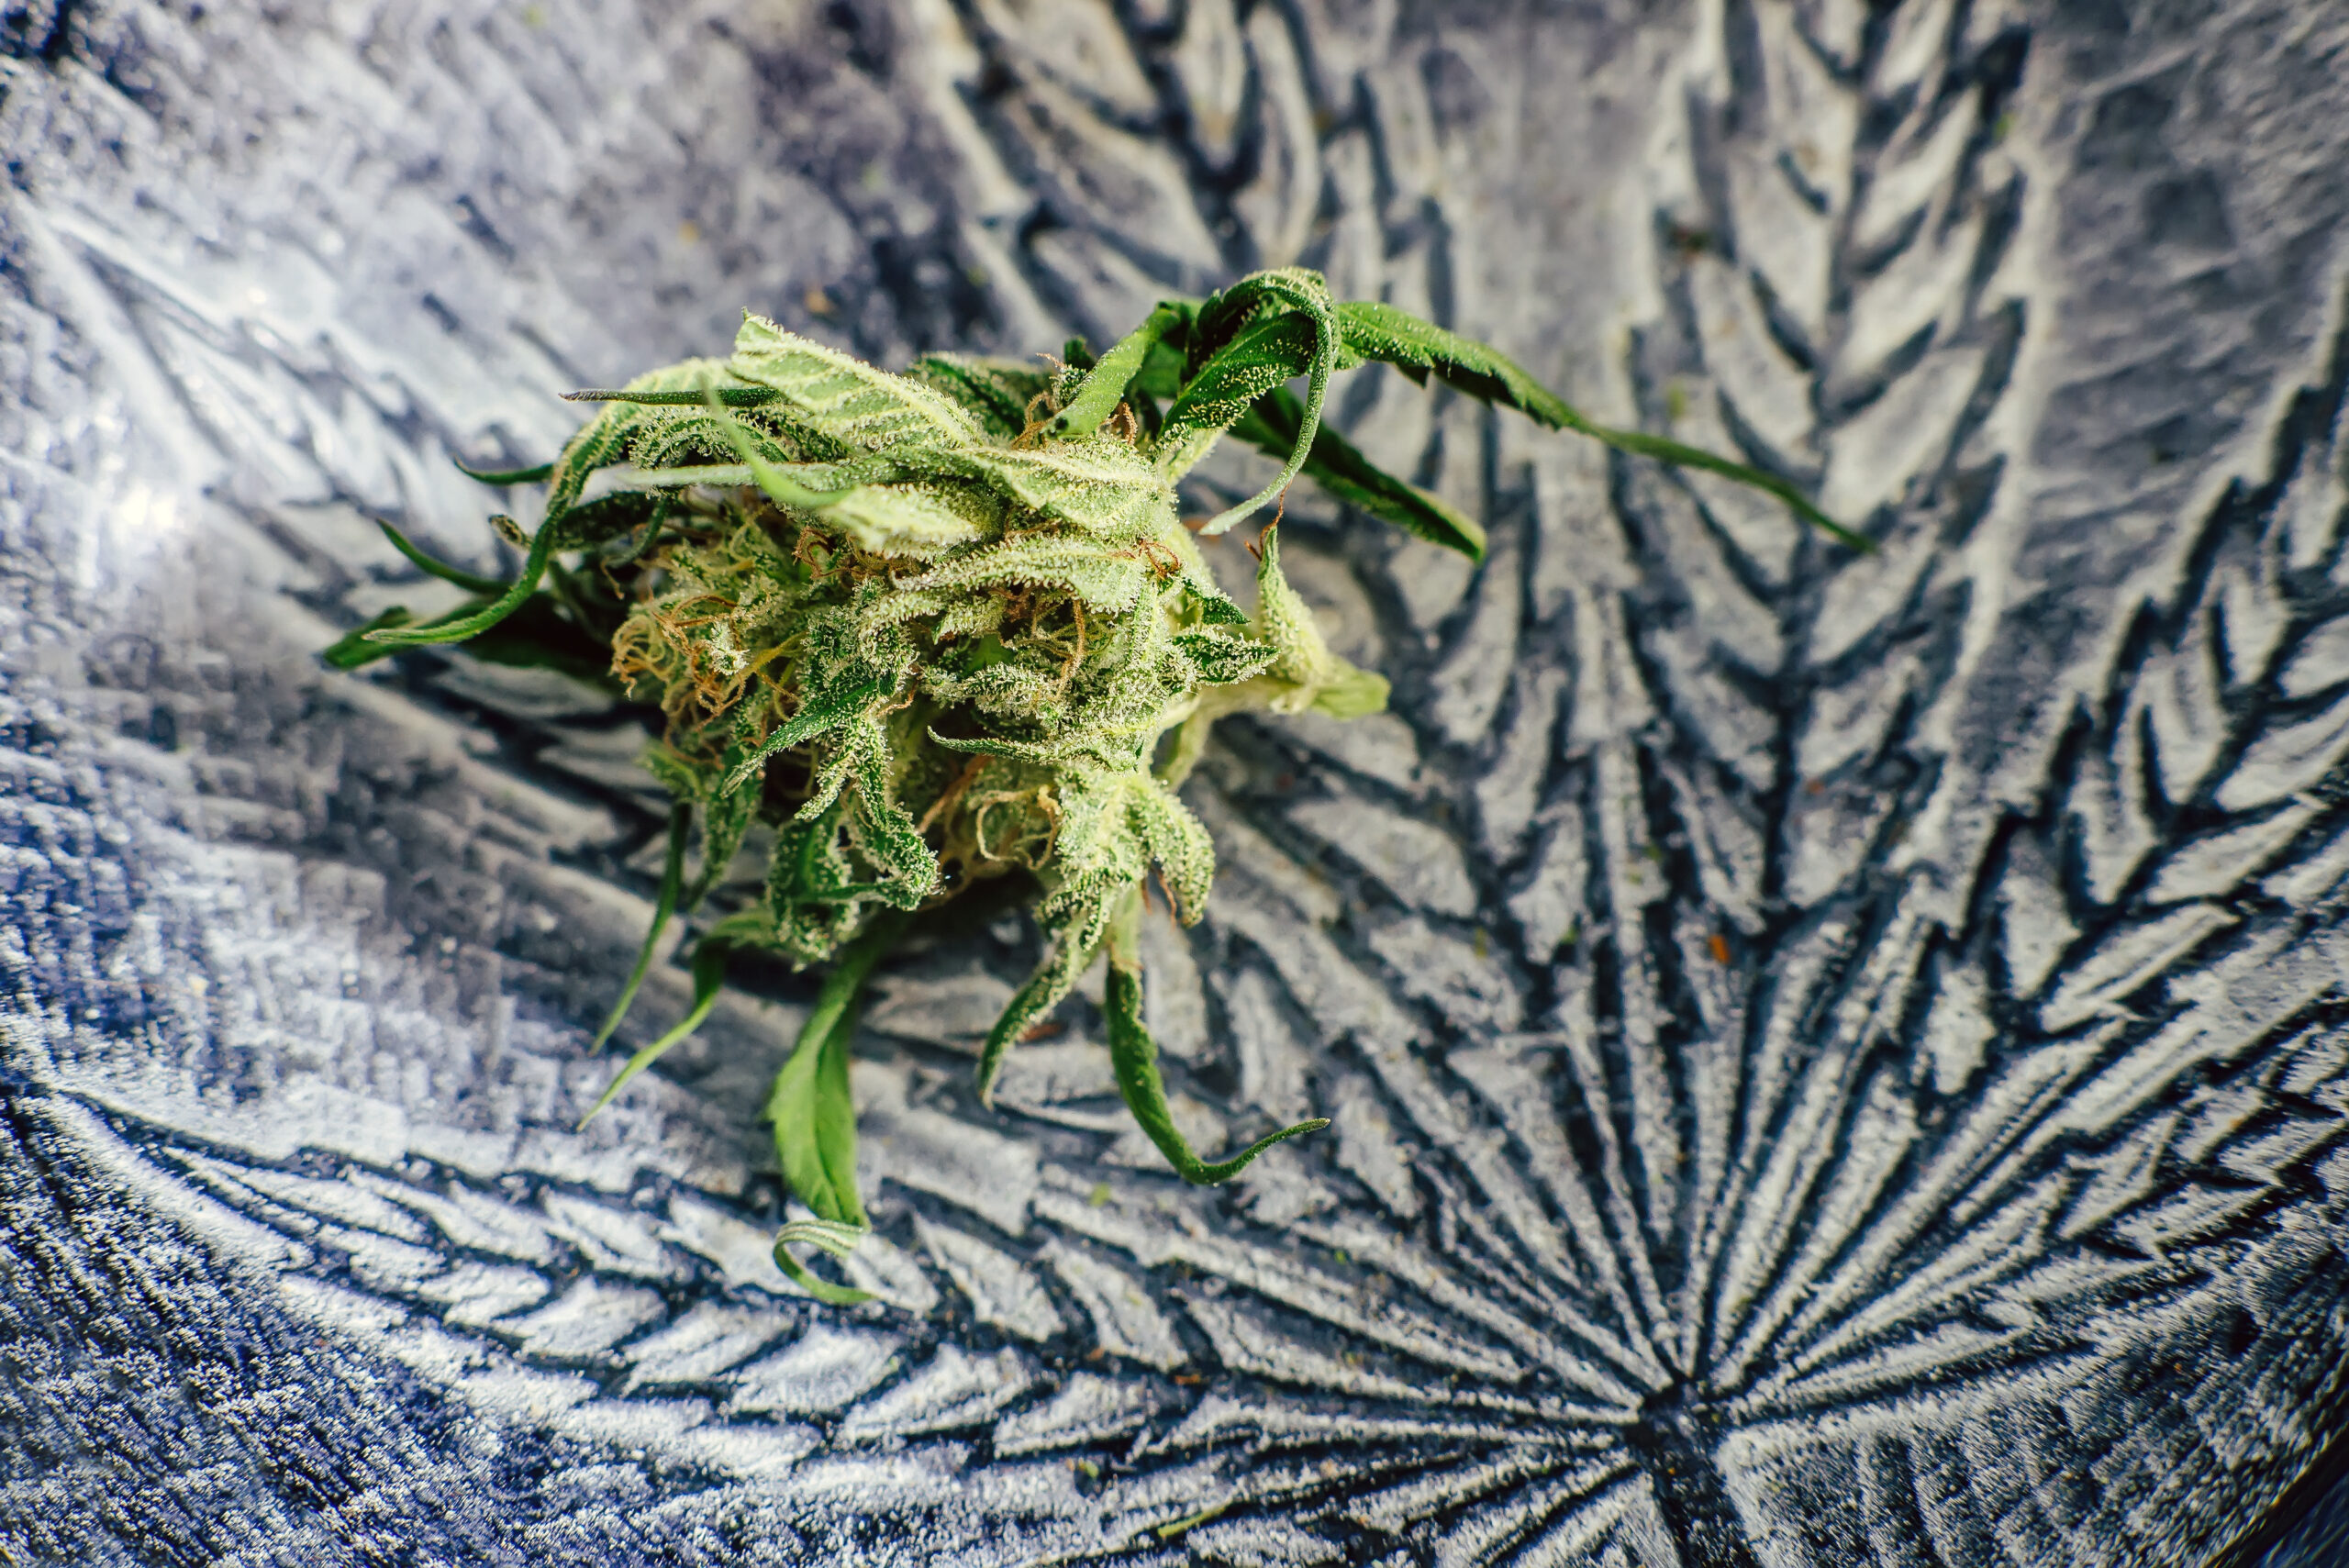 Pre-Rolled Blunts Vs. Cannabis Flower